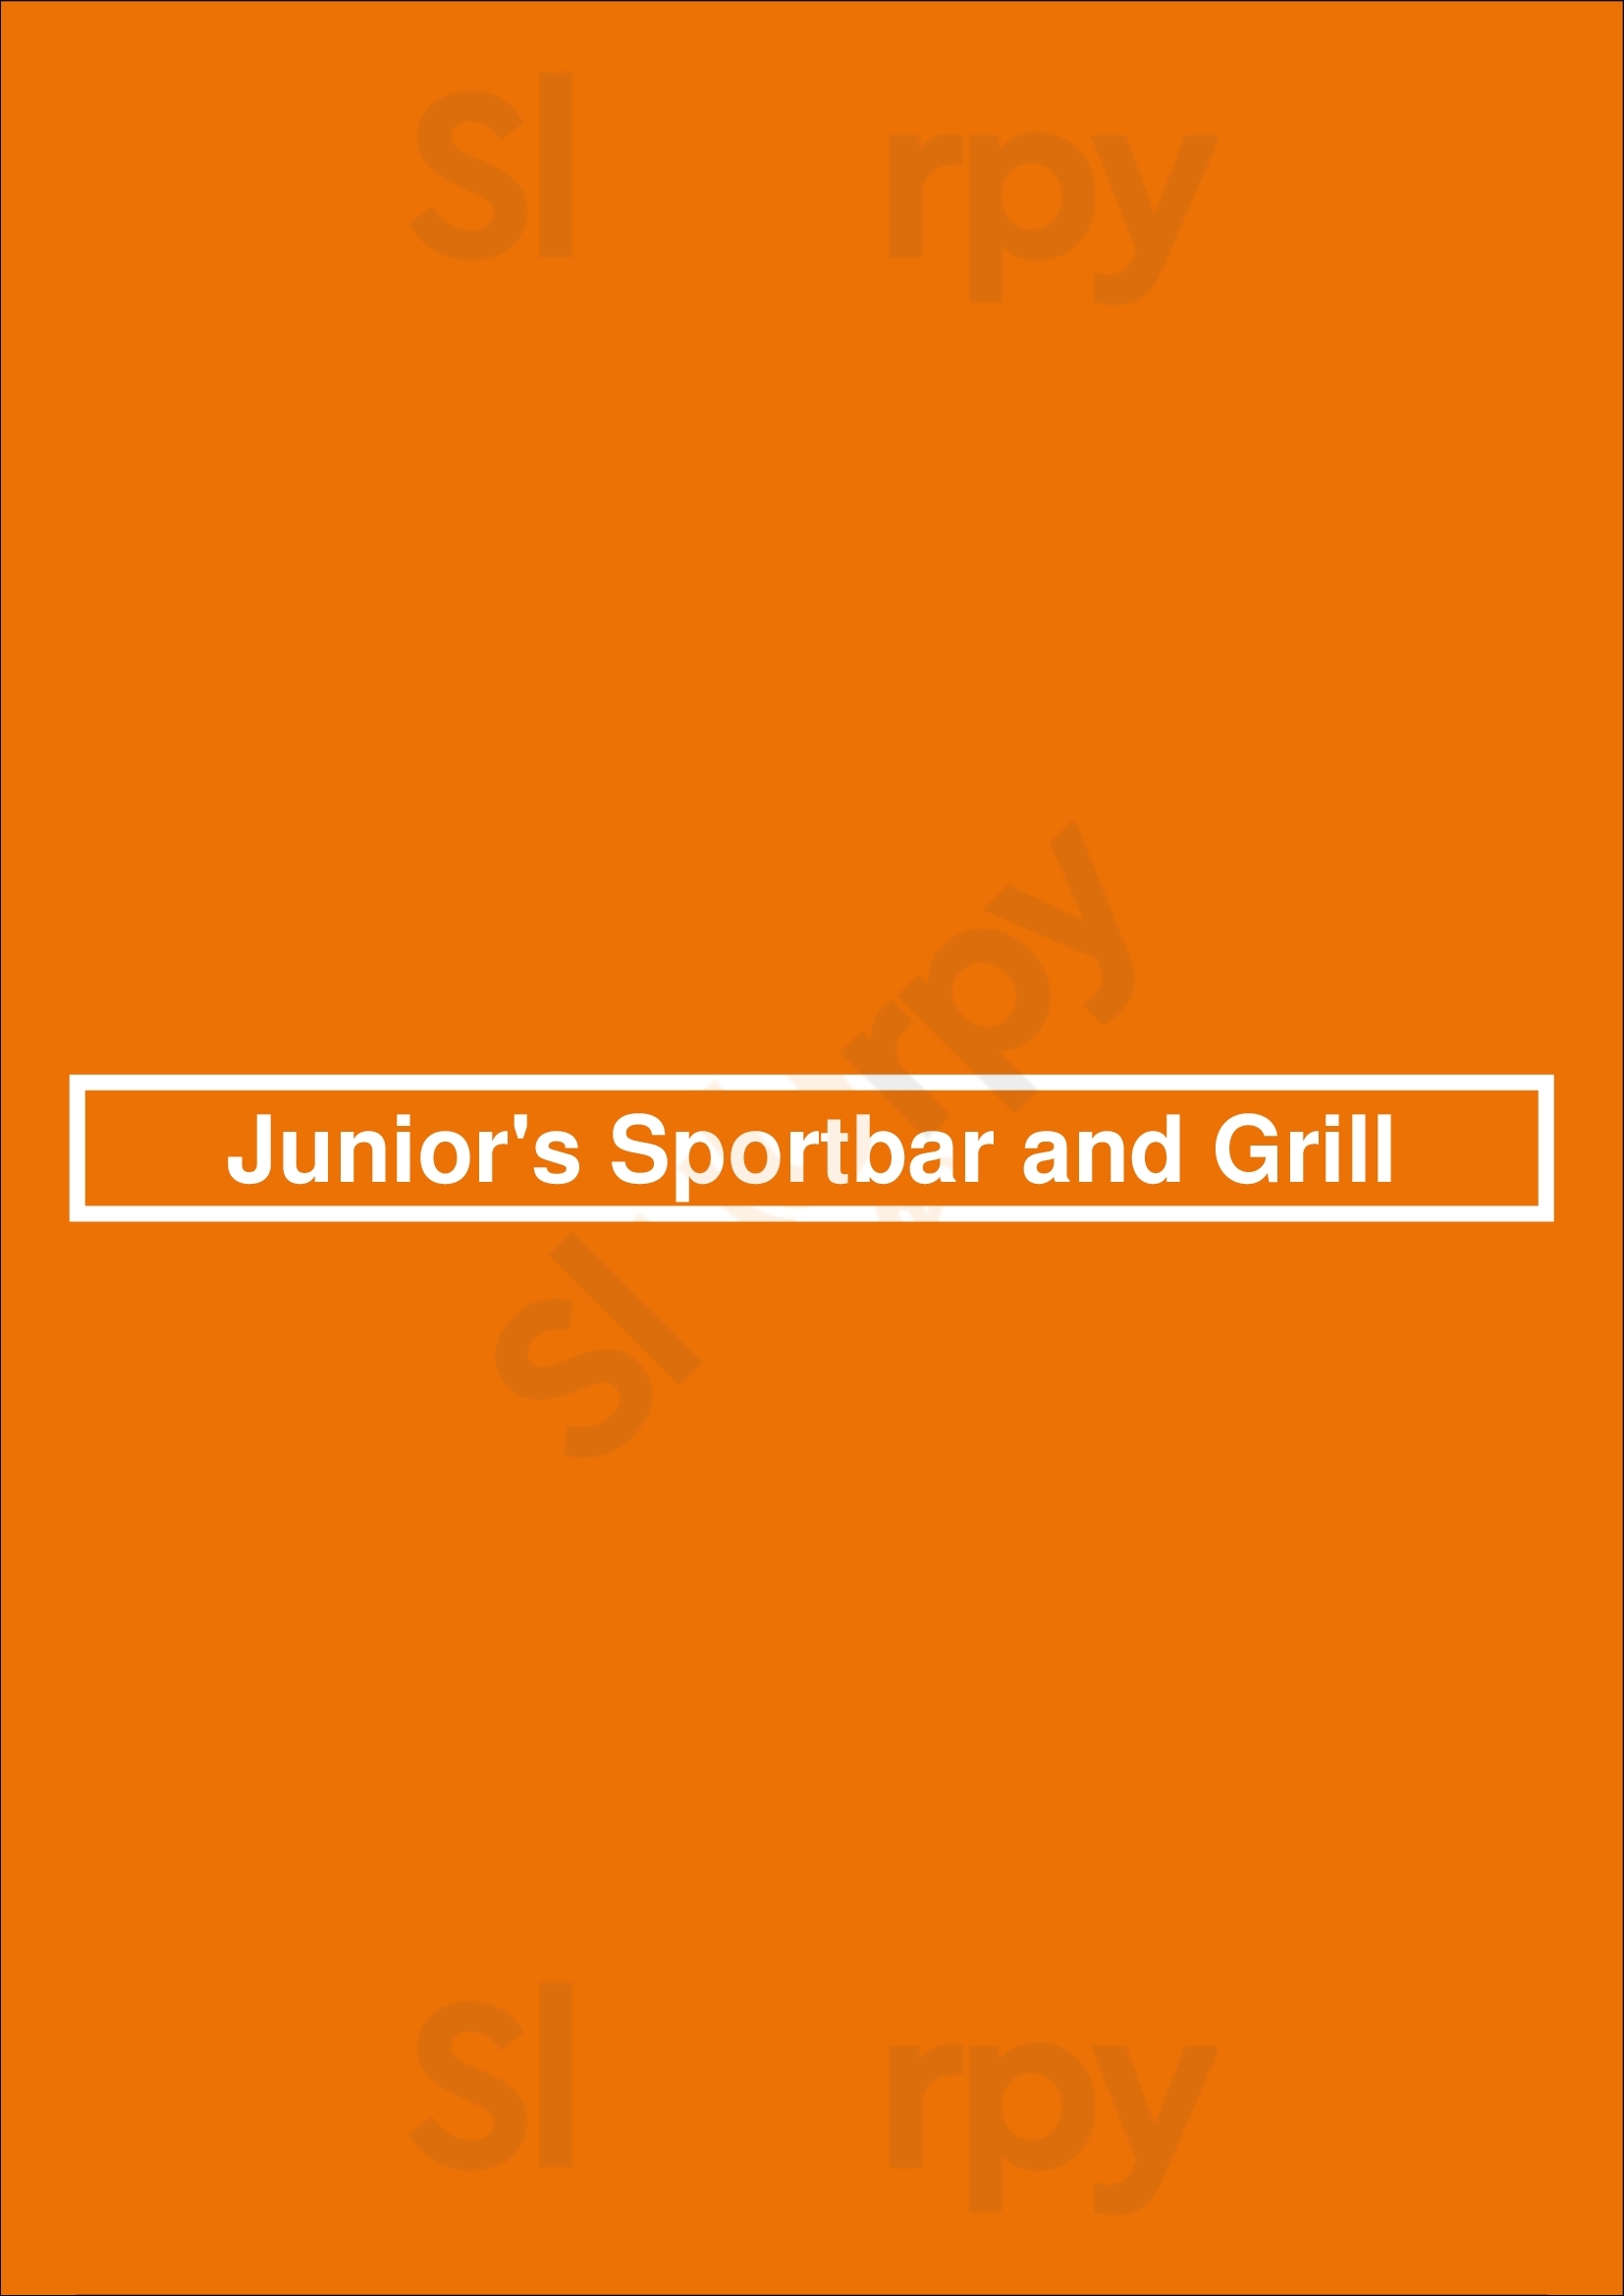 Junior's Sportbar And Grill Cambridge Menu - 1